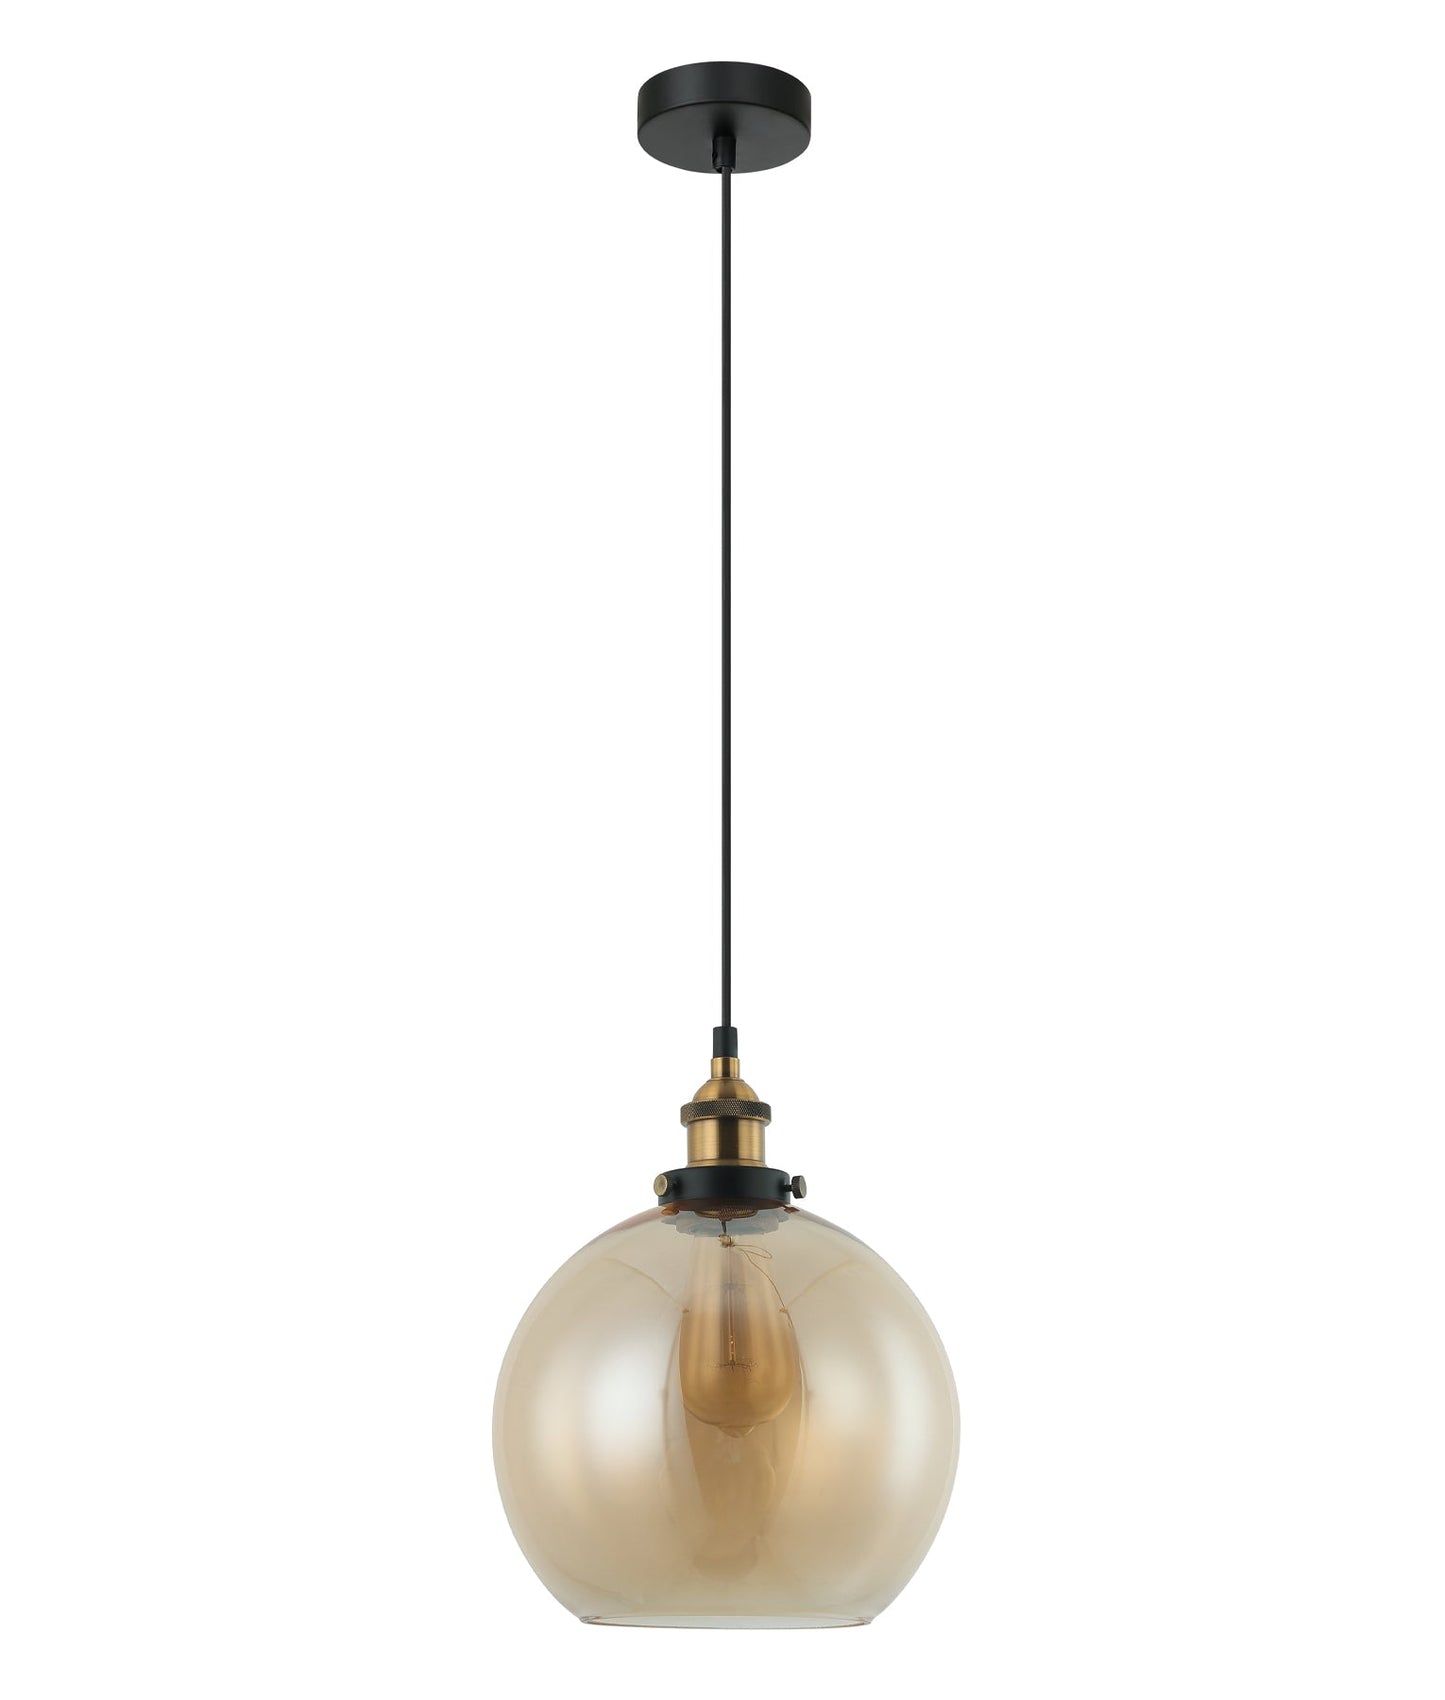 PESINI: Interior Wine Glass with Antique Brass/ Chrome Highlight Pendant Lights